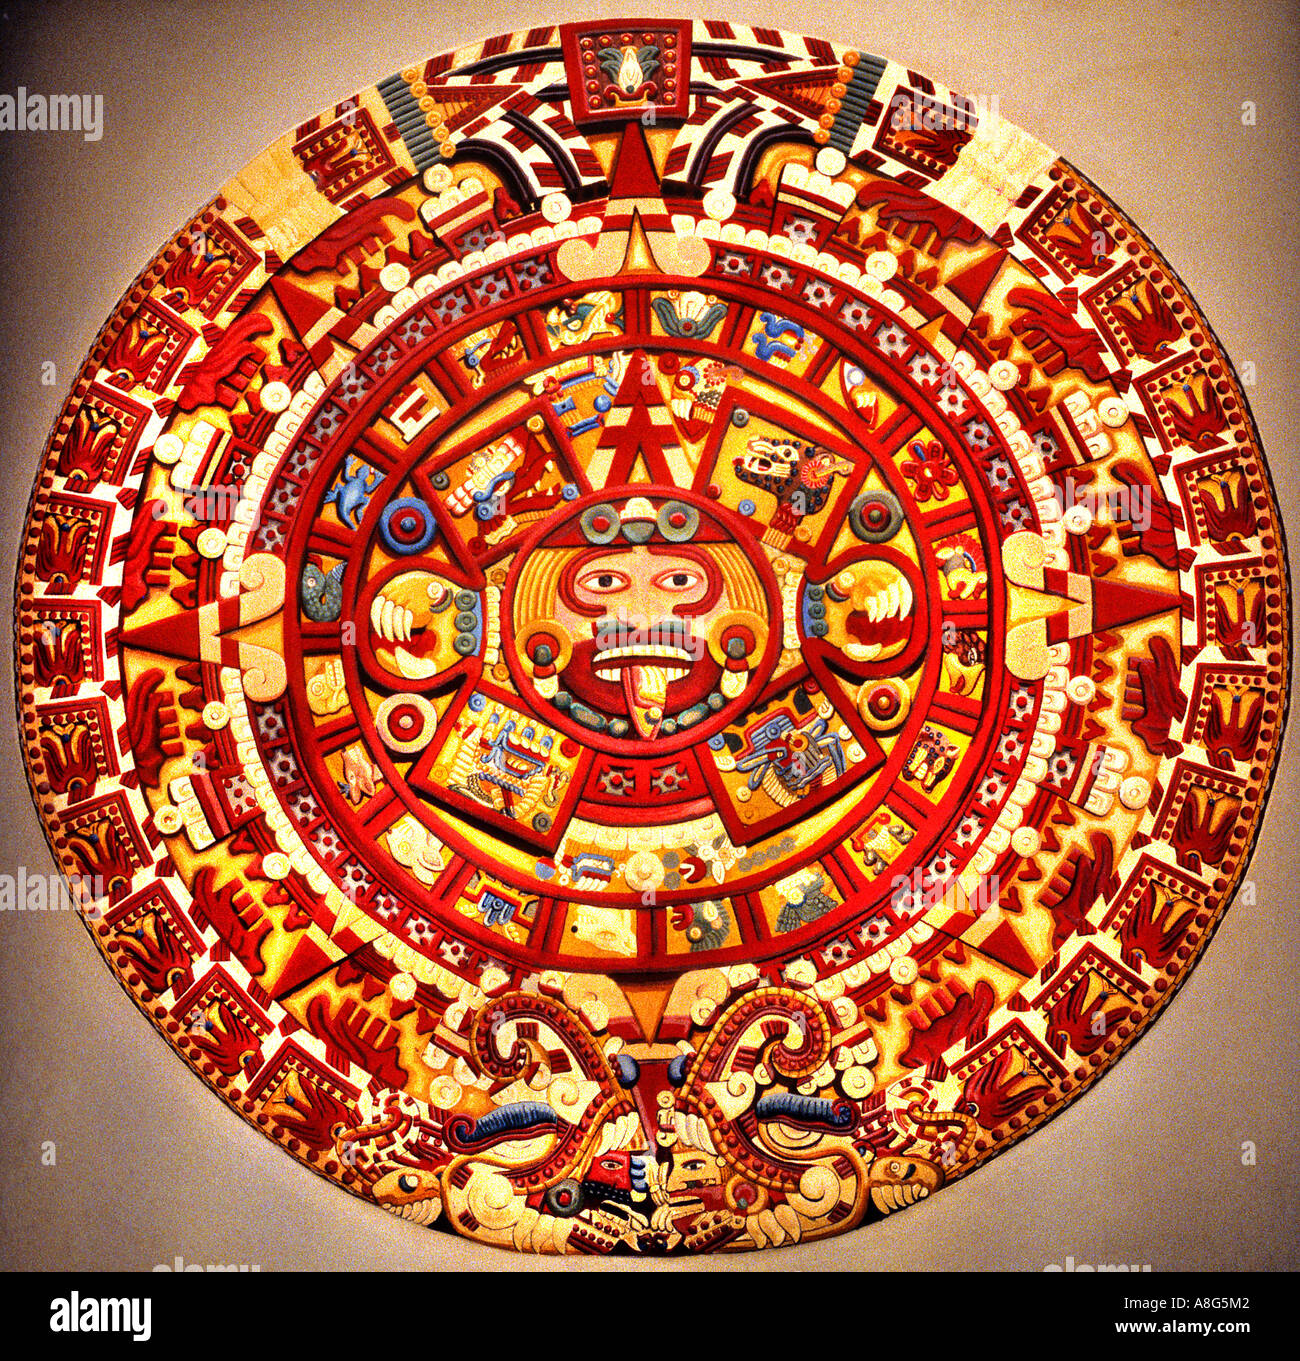 Календарь майя конспект. Камень солнца ацтеков музей Мехико. Календарь ацтеков камень солнца. Солнечный камень древних ацтеков. Древний Ацтекский календарь.